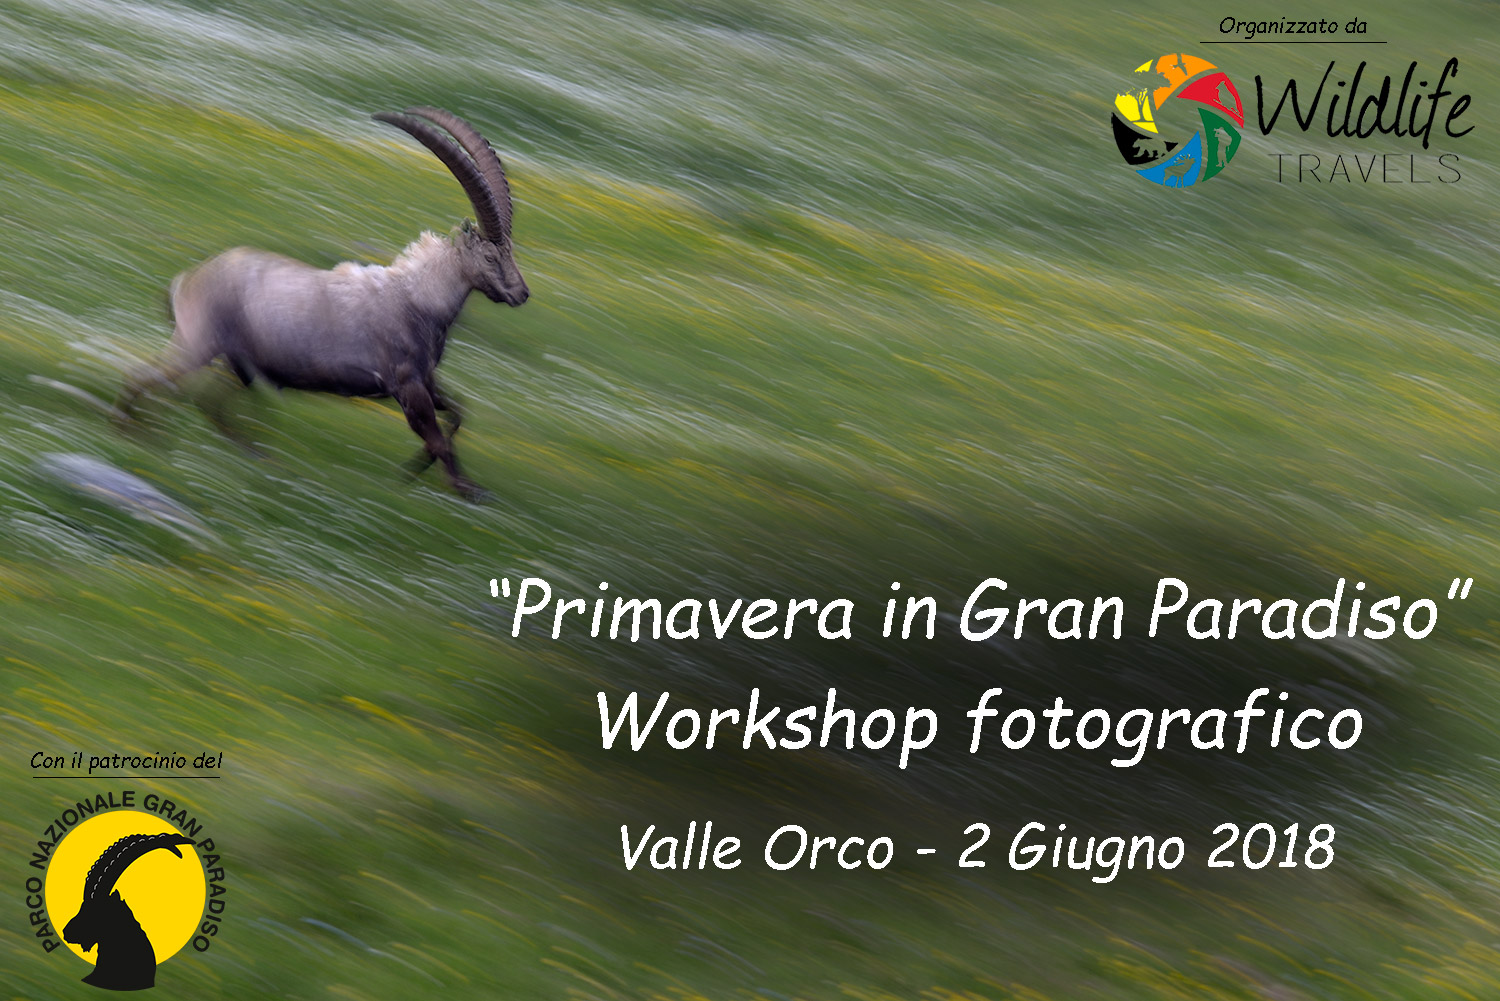 Workshop fotografico "Primavera in Gran Paradiso"